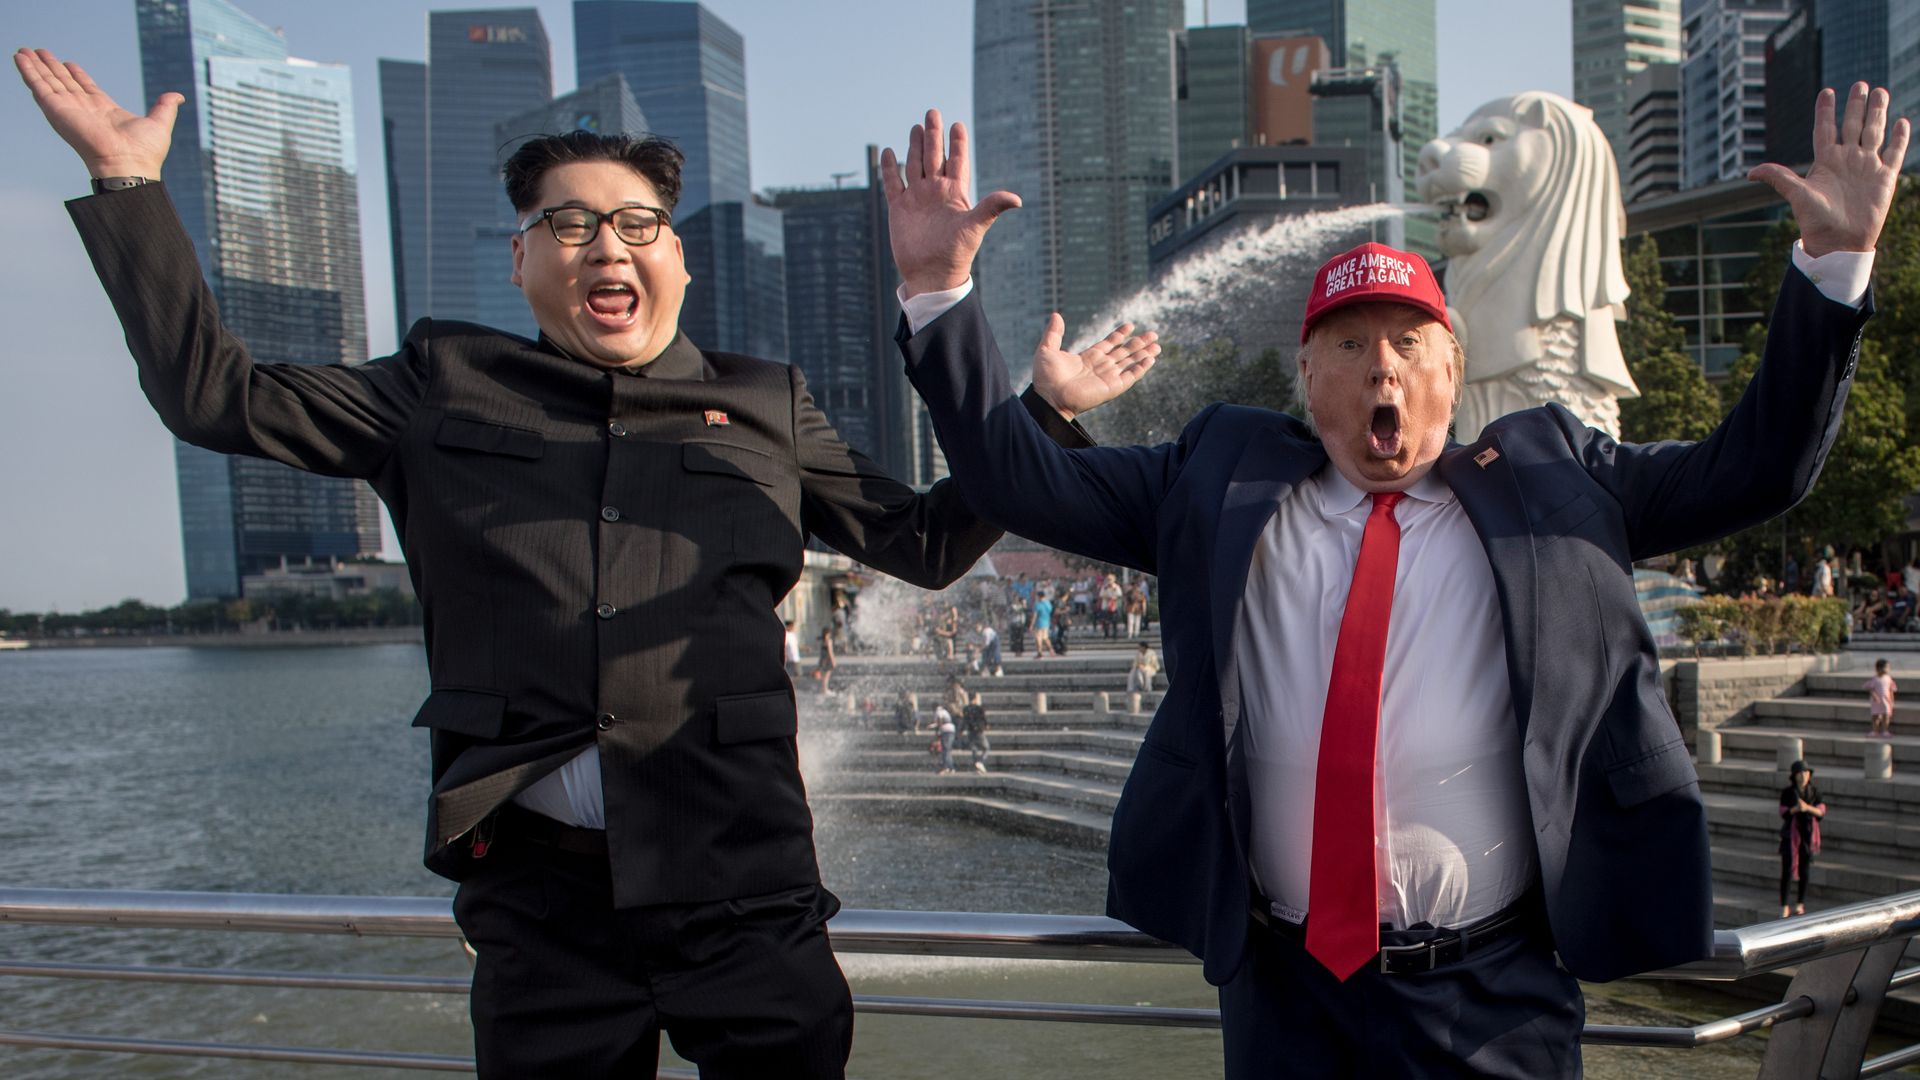 Kim Jong Un impersonator, Howard X and Donald Trump impersonator Dennis Alan